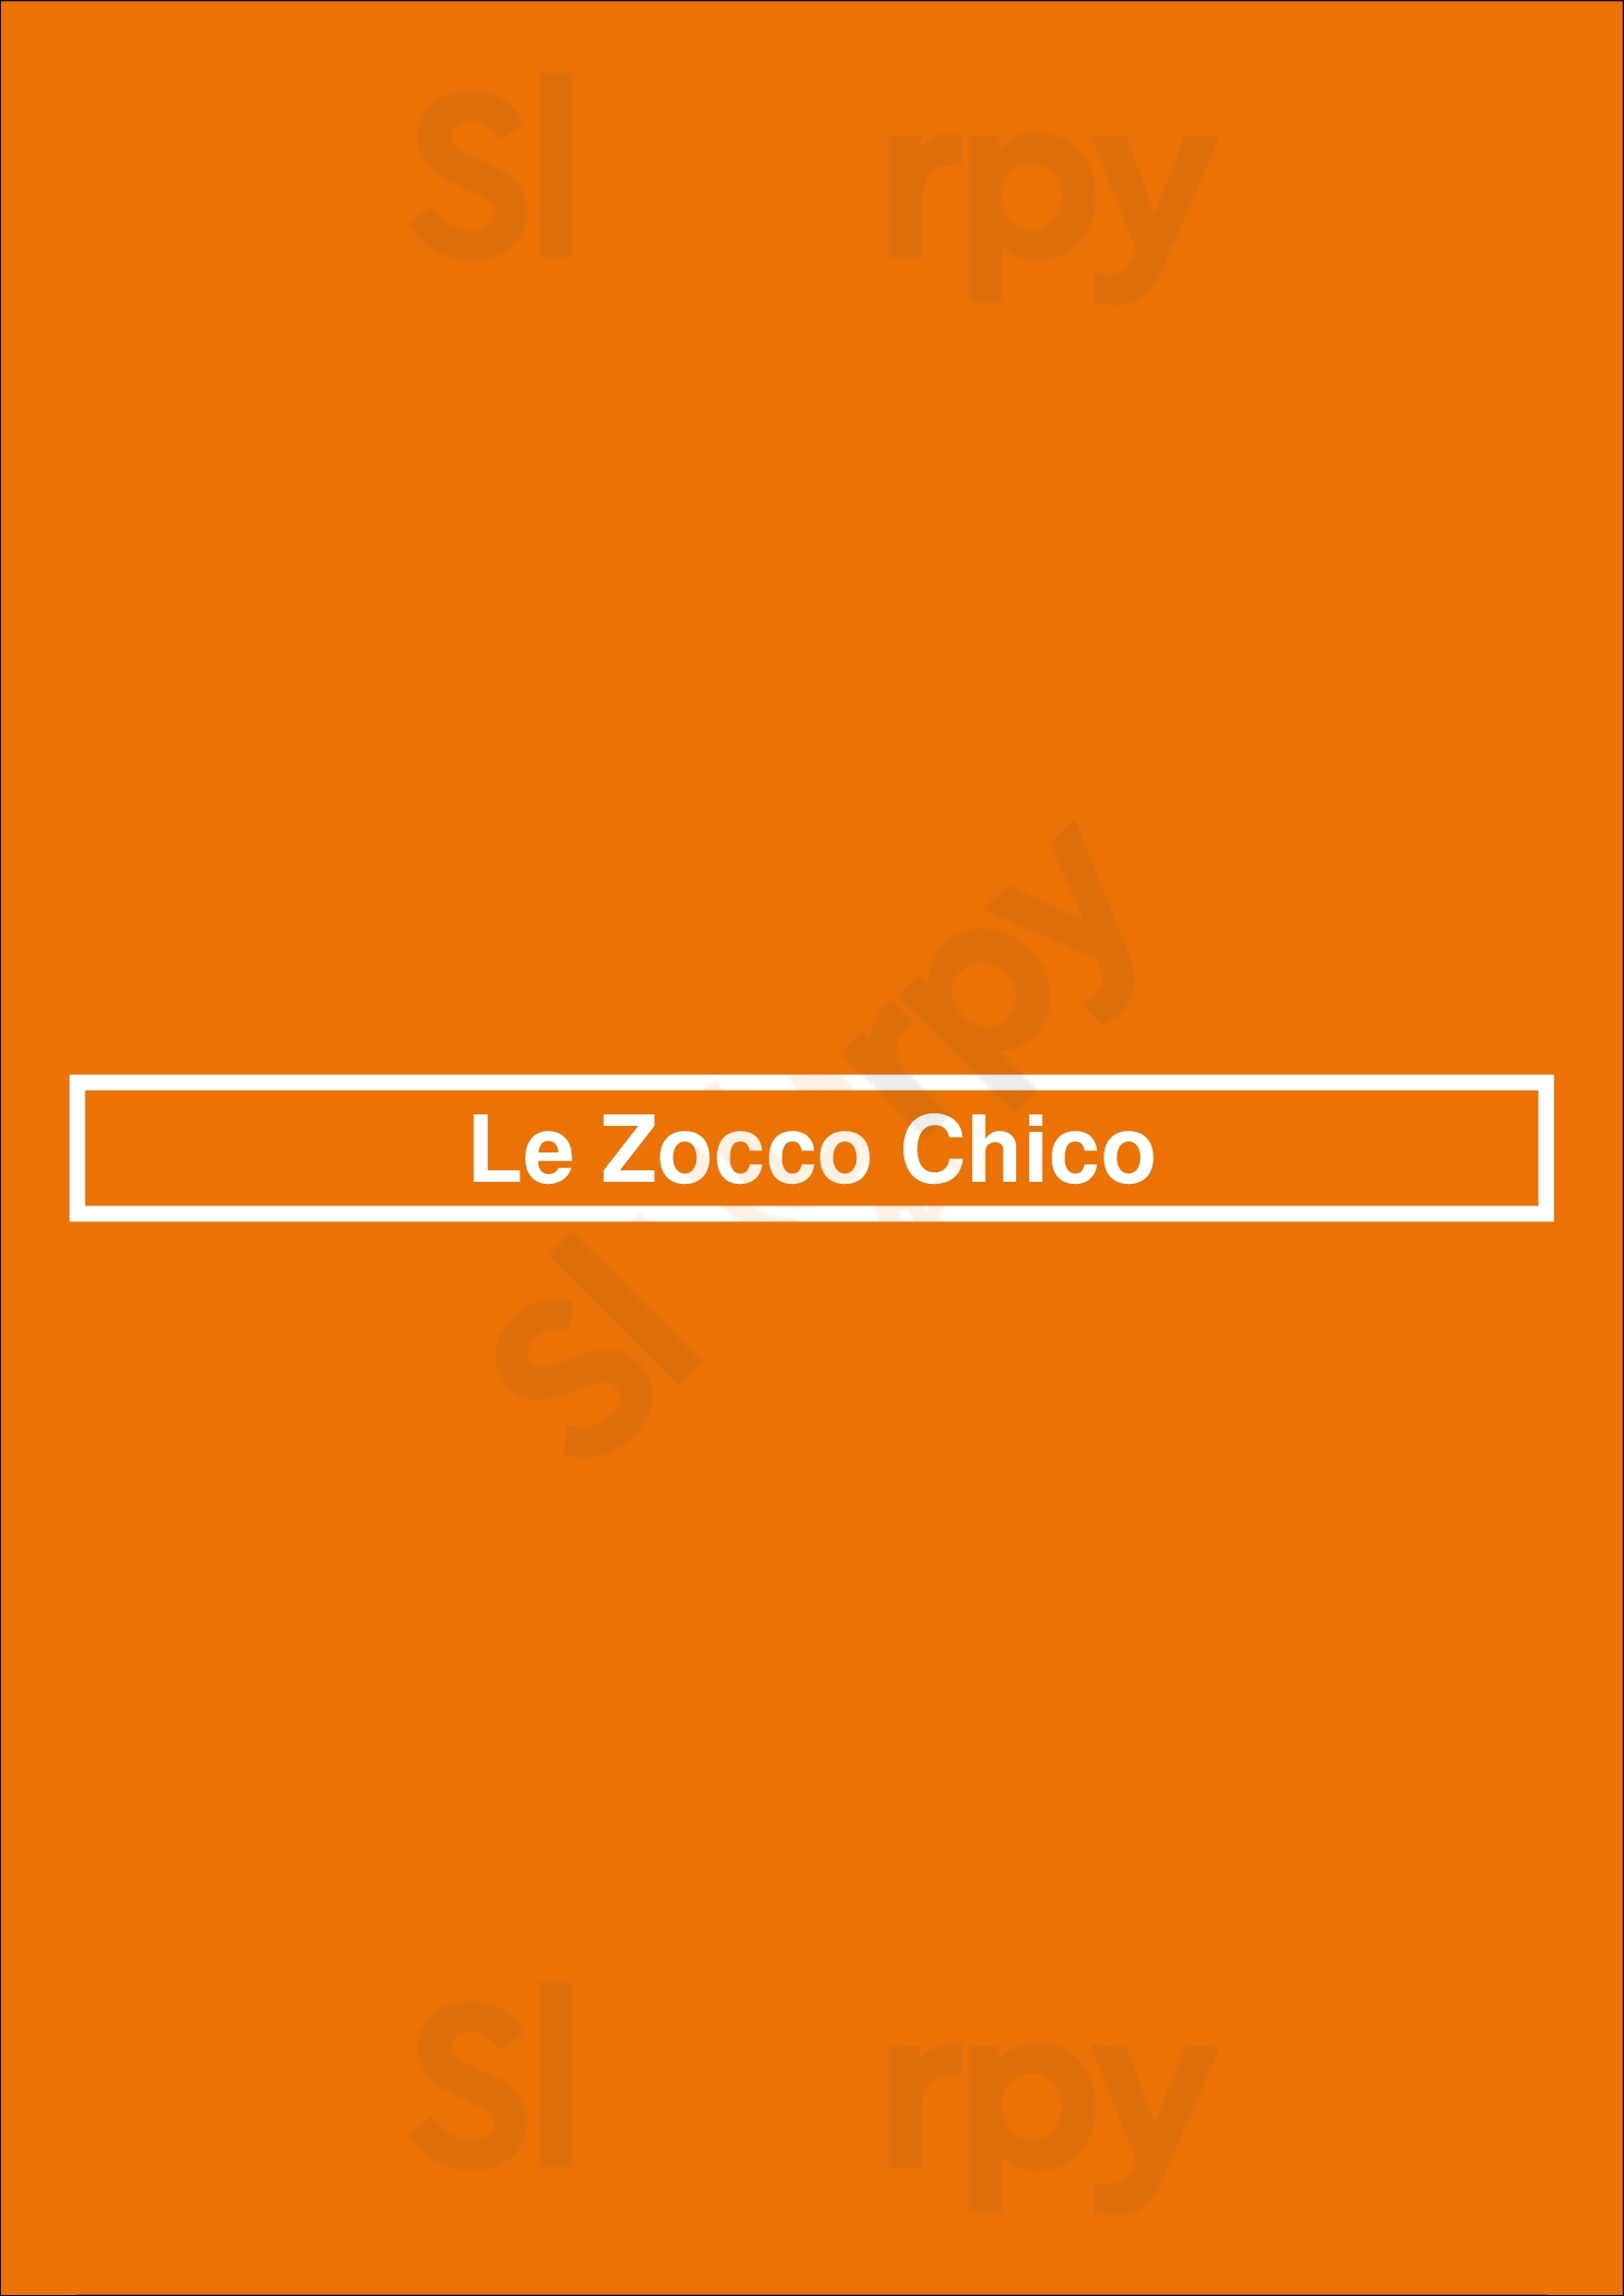 Le Zocco Chico Liège Menu - 1